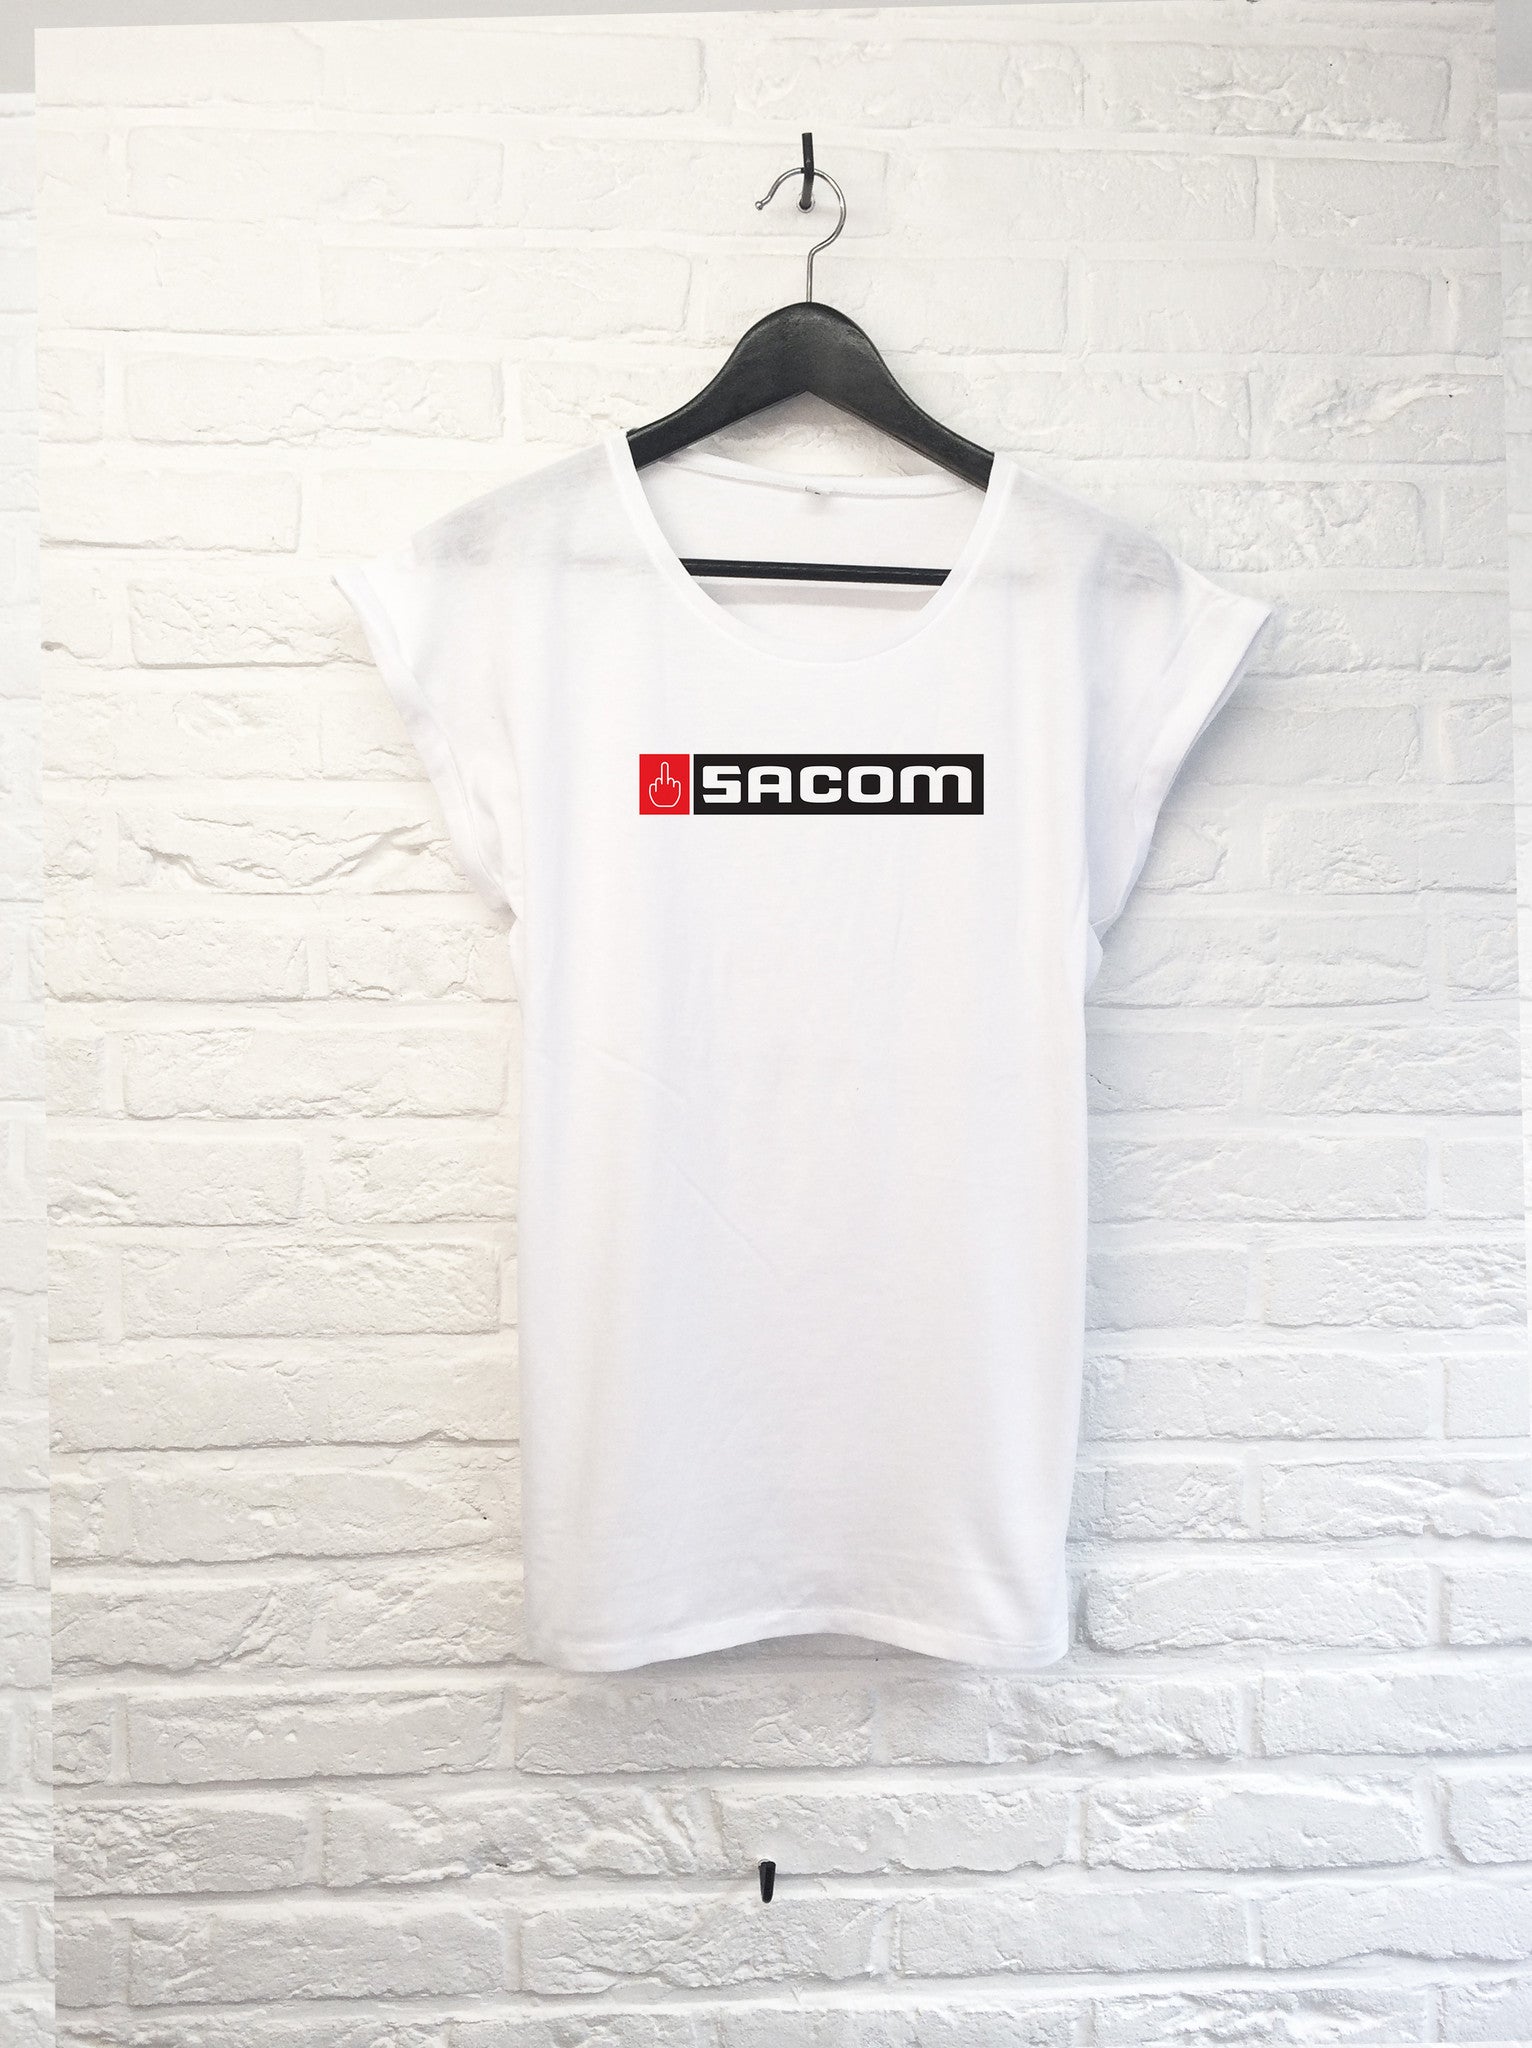 Sacom - Femme-T shirt-Atelier Amelot